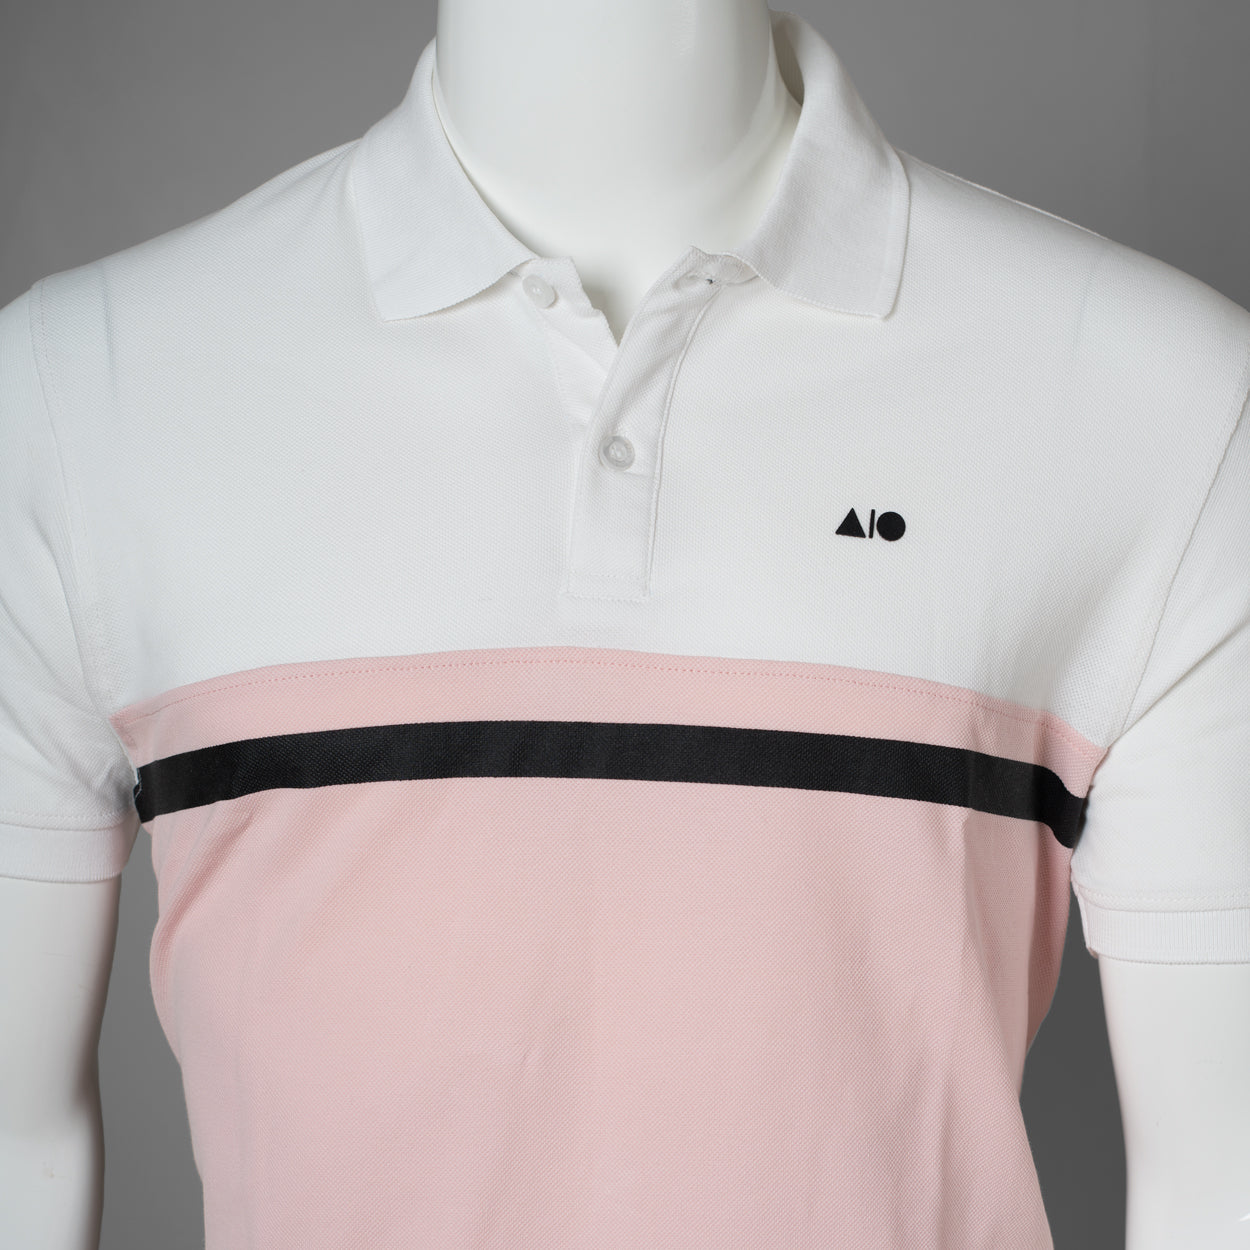 Mens Cut & Print Polo Shirt (White & Pink)